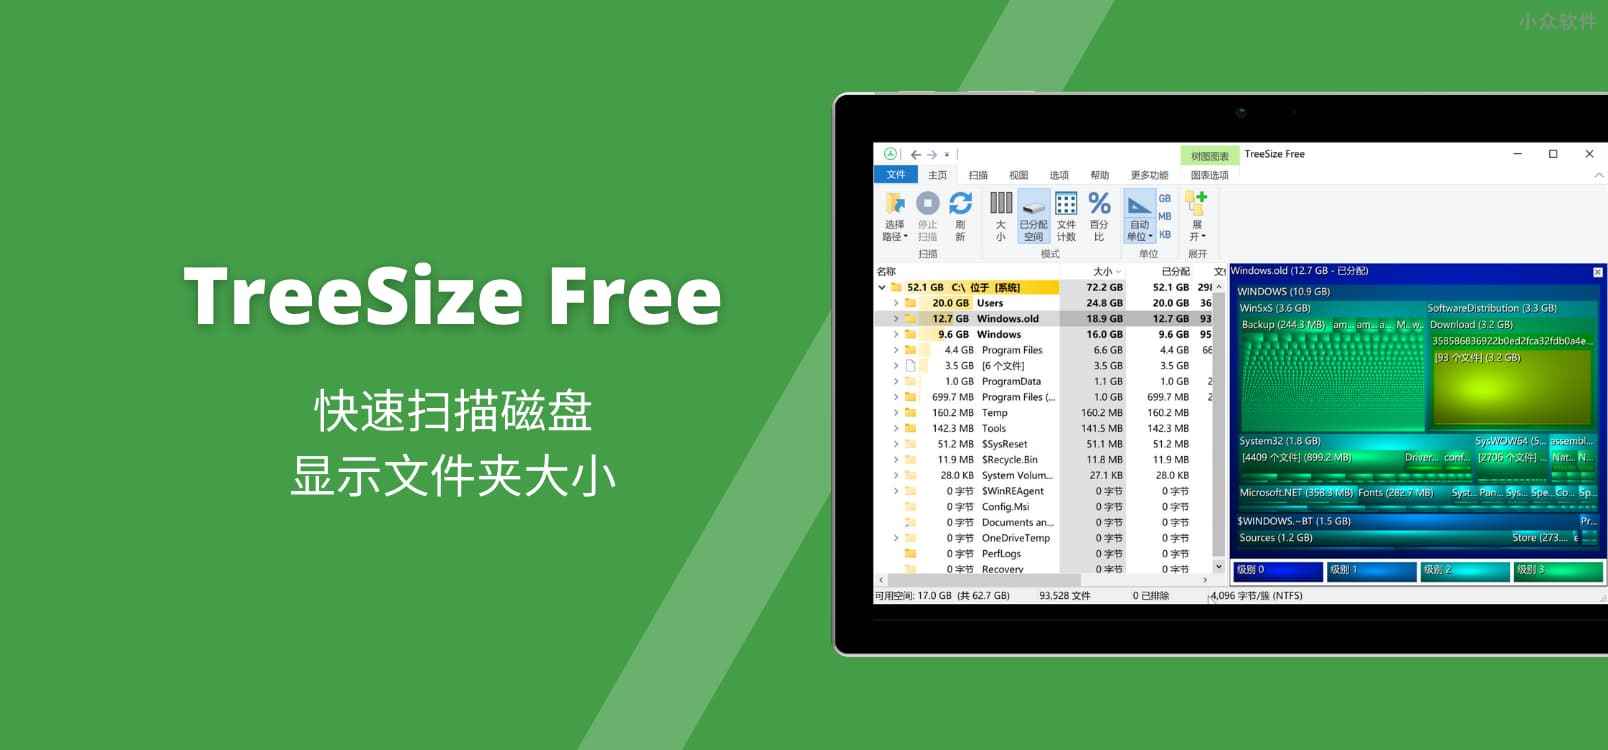 TreeSize Free – 快速扫描磁盘，显示文件夹大小[Windows]